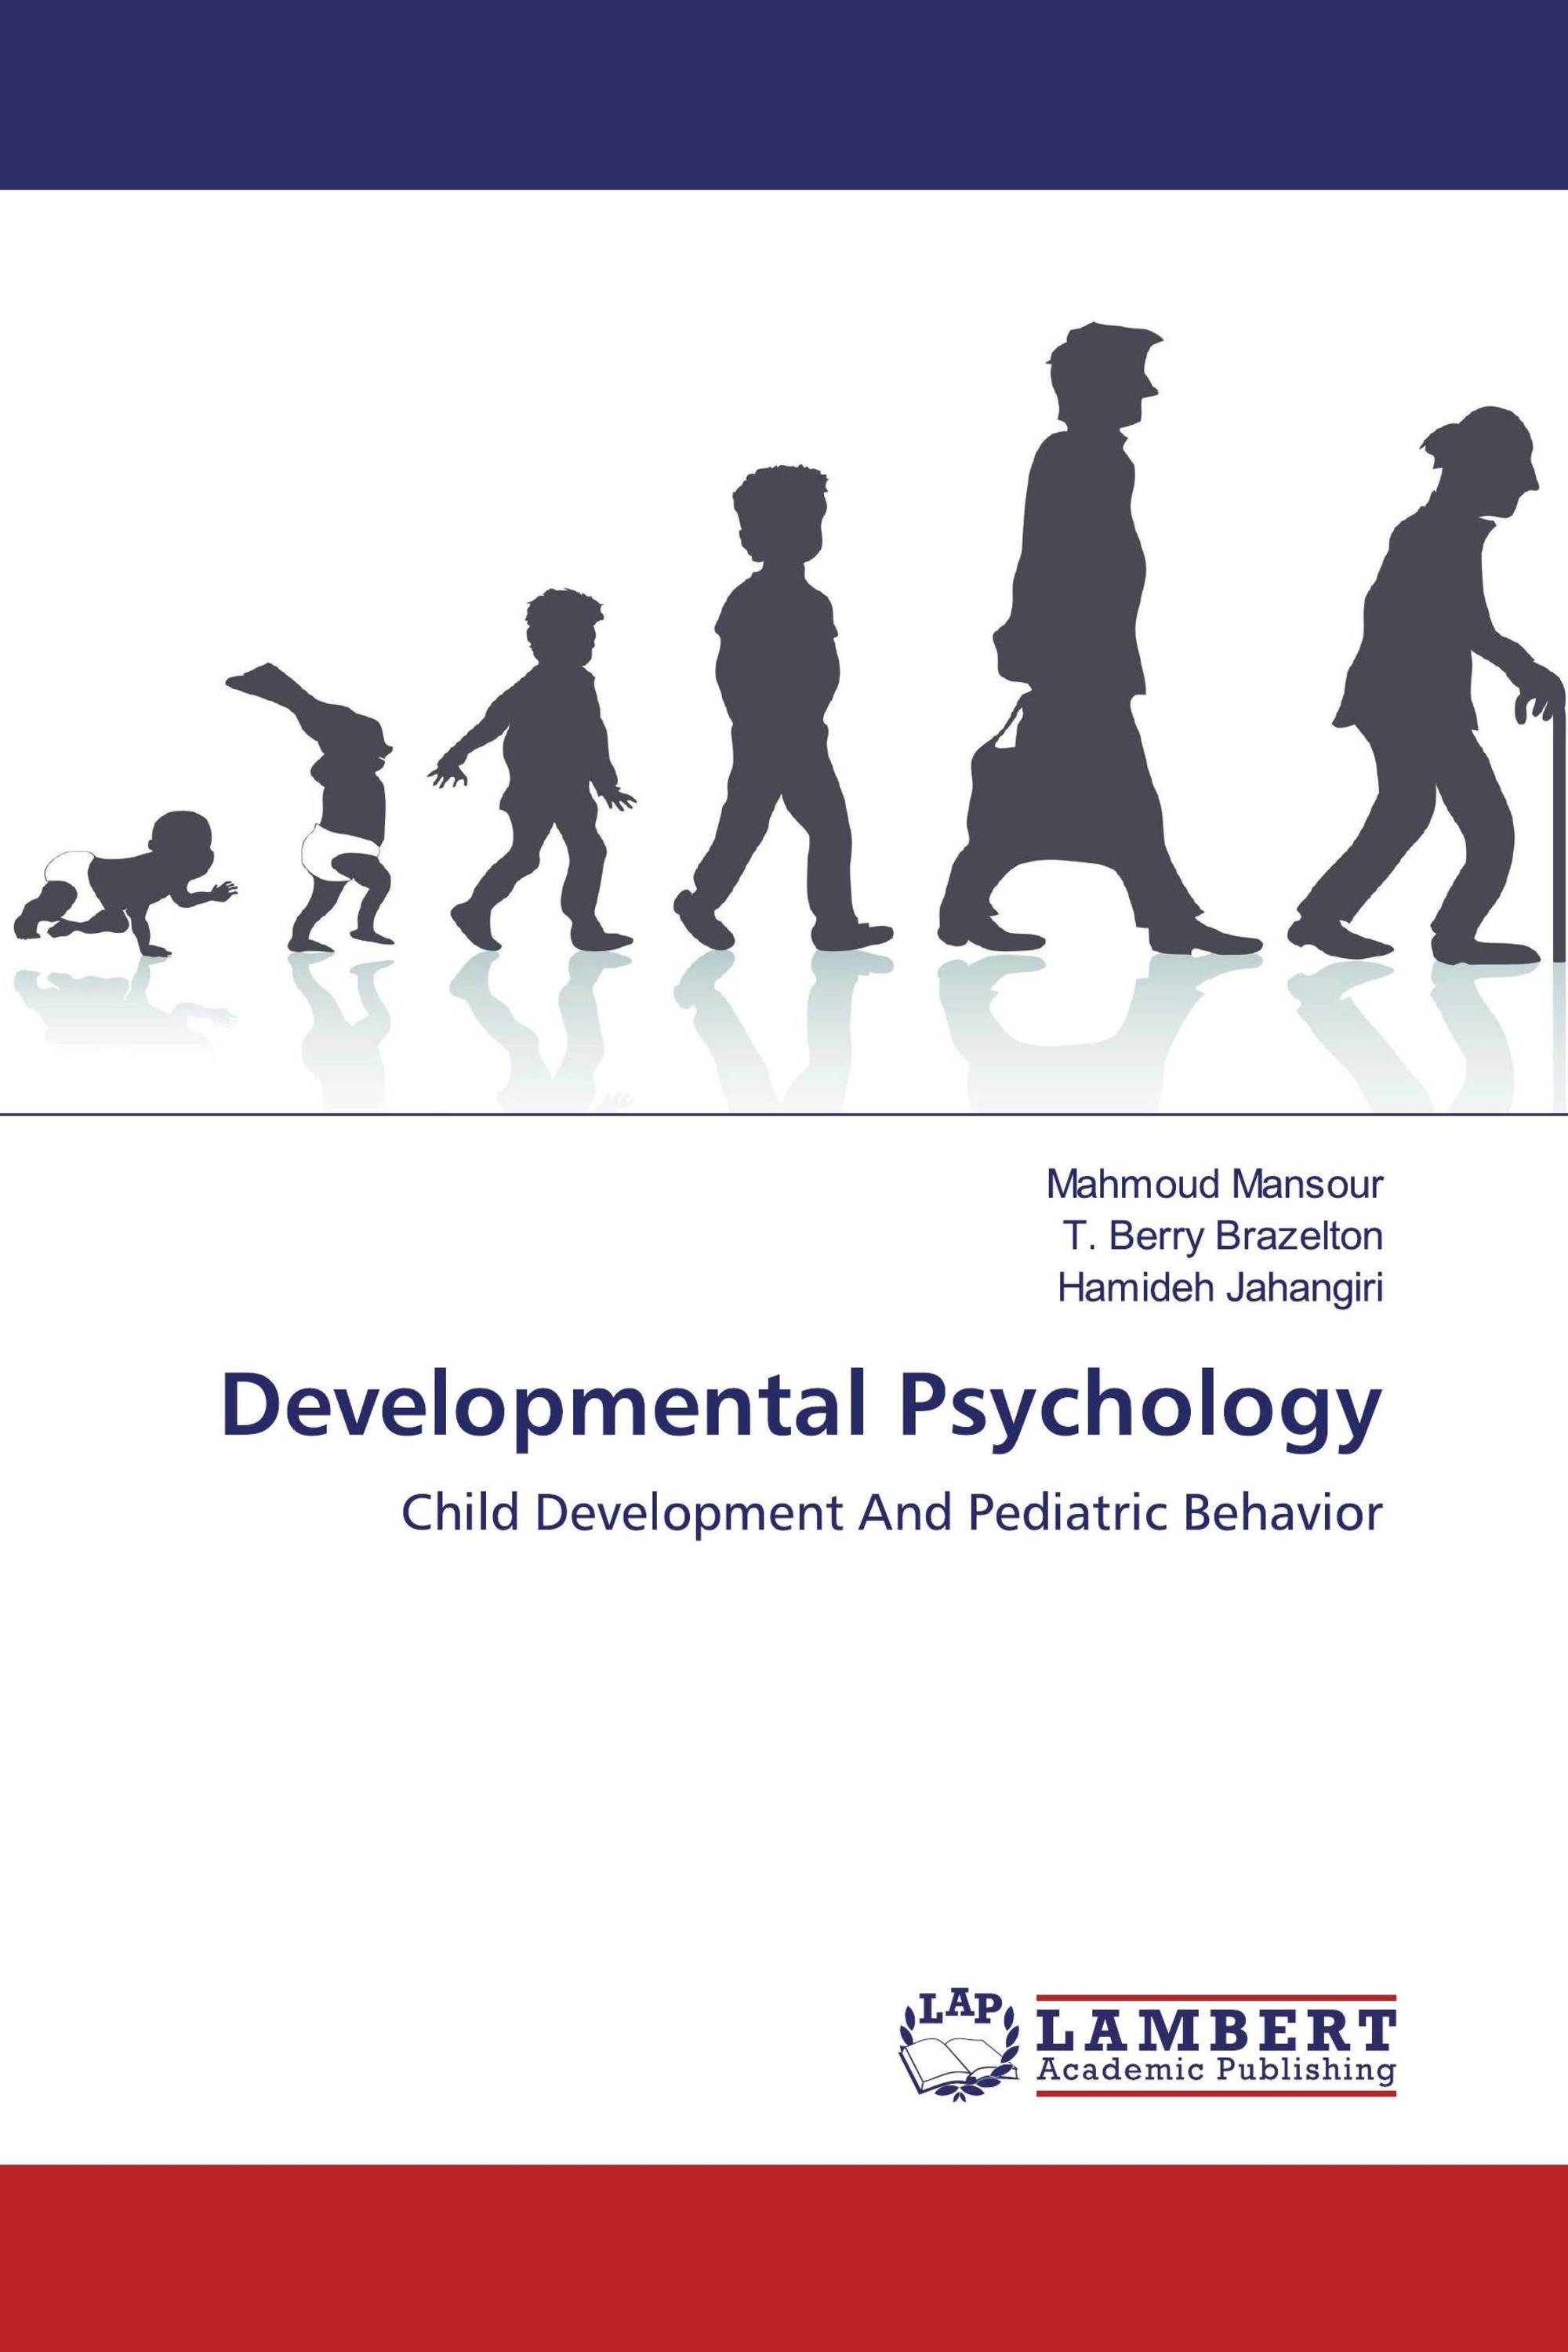 stanford developmental psychology phd